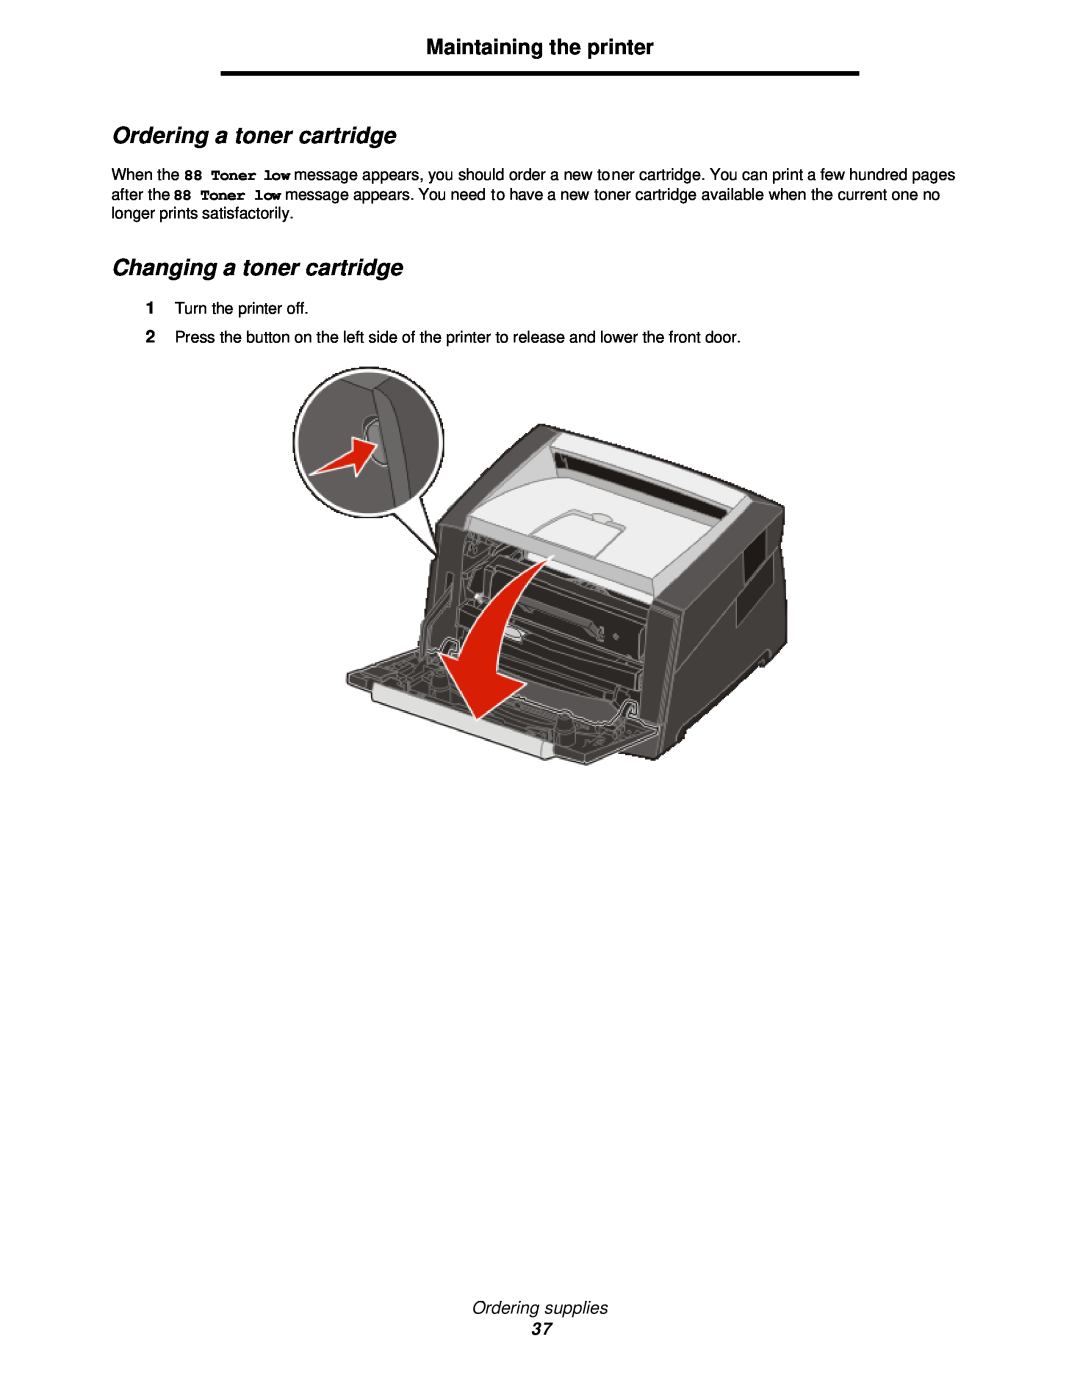 Lexmark 350d manual Ordering a toner cartridge, Changing a toner cartridge, Maintaining the printer, Ordering supplies 